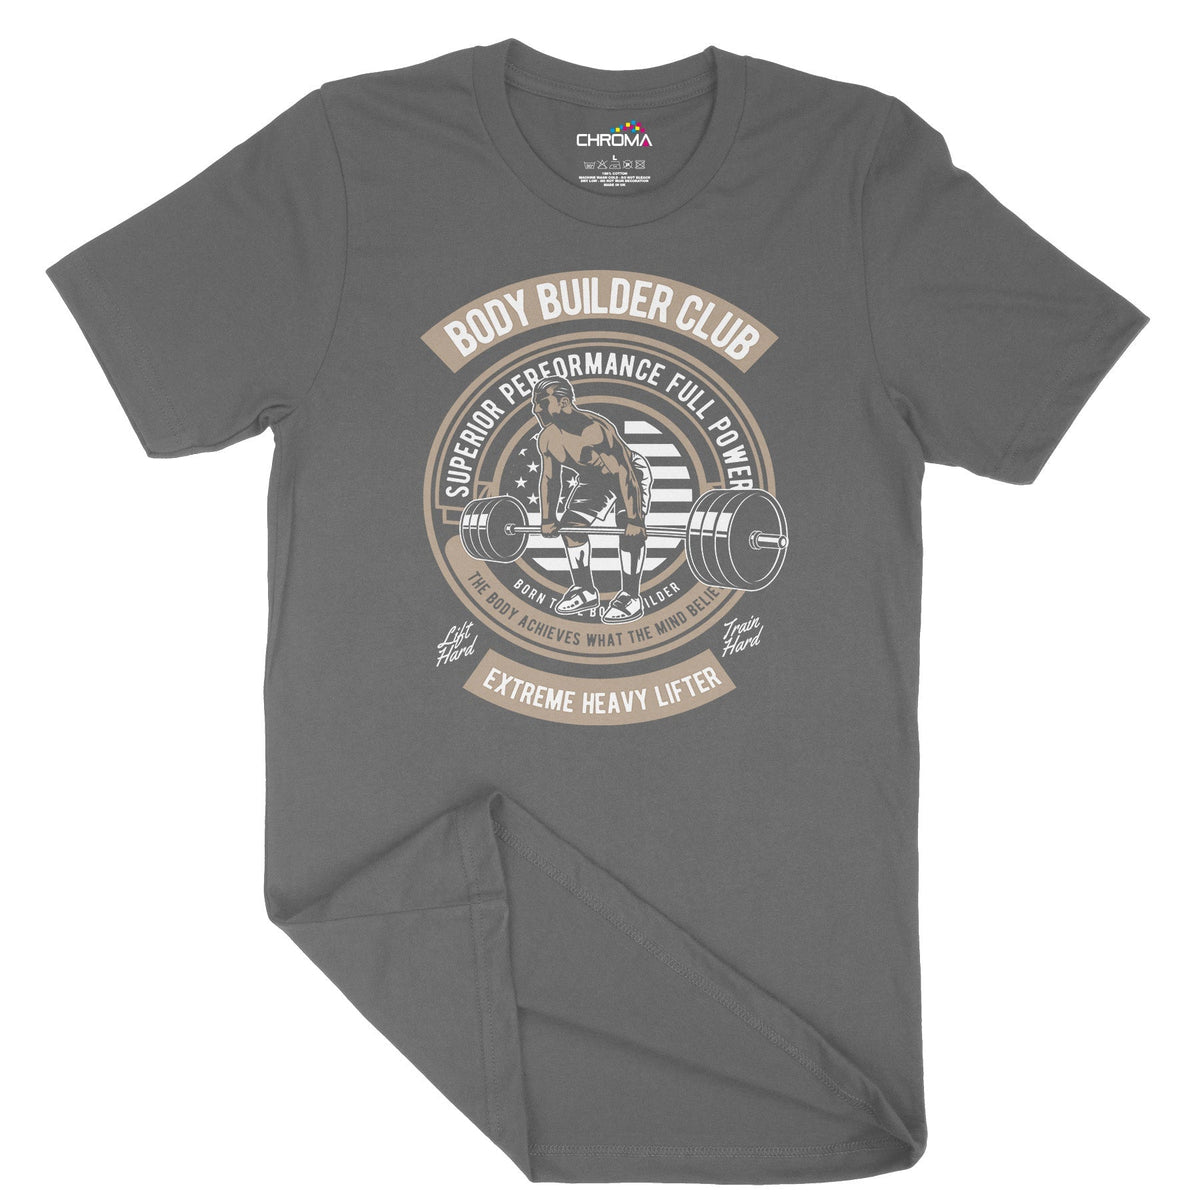 Body Builder Club | Vintage Adult T-Shirt | Classic Vintage Clothing Chroma Clothing